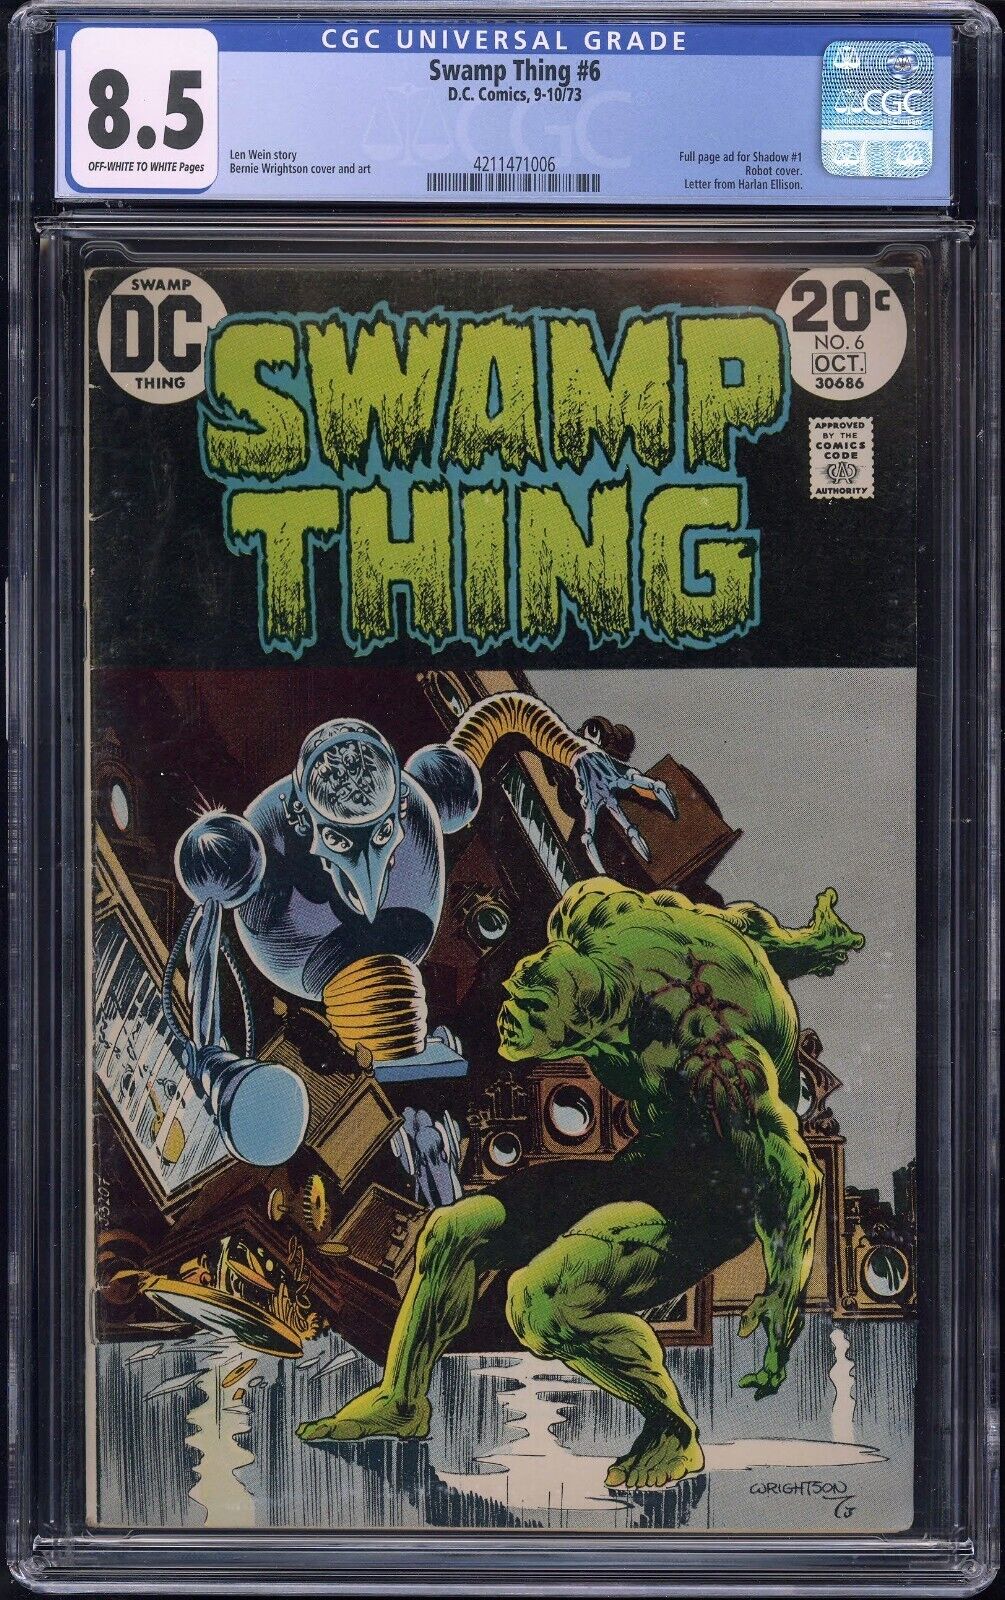 Swamp Thing #6 CGC 8.5 VF+ Key Letter from Harlan Ellison|Robot 1973 DC Comics